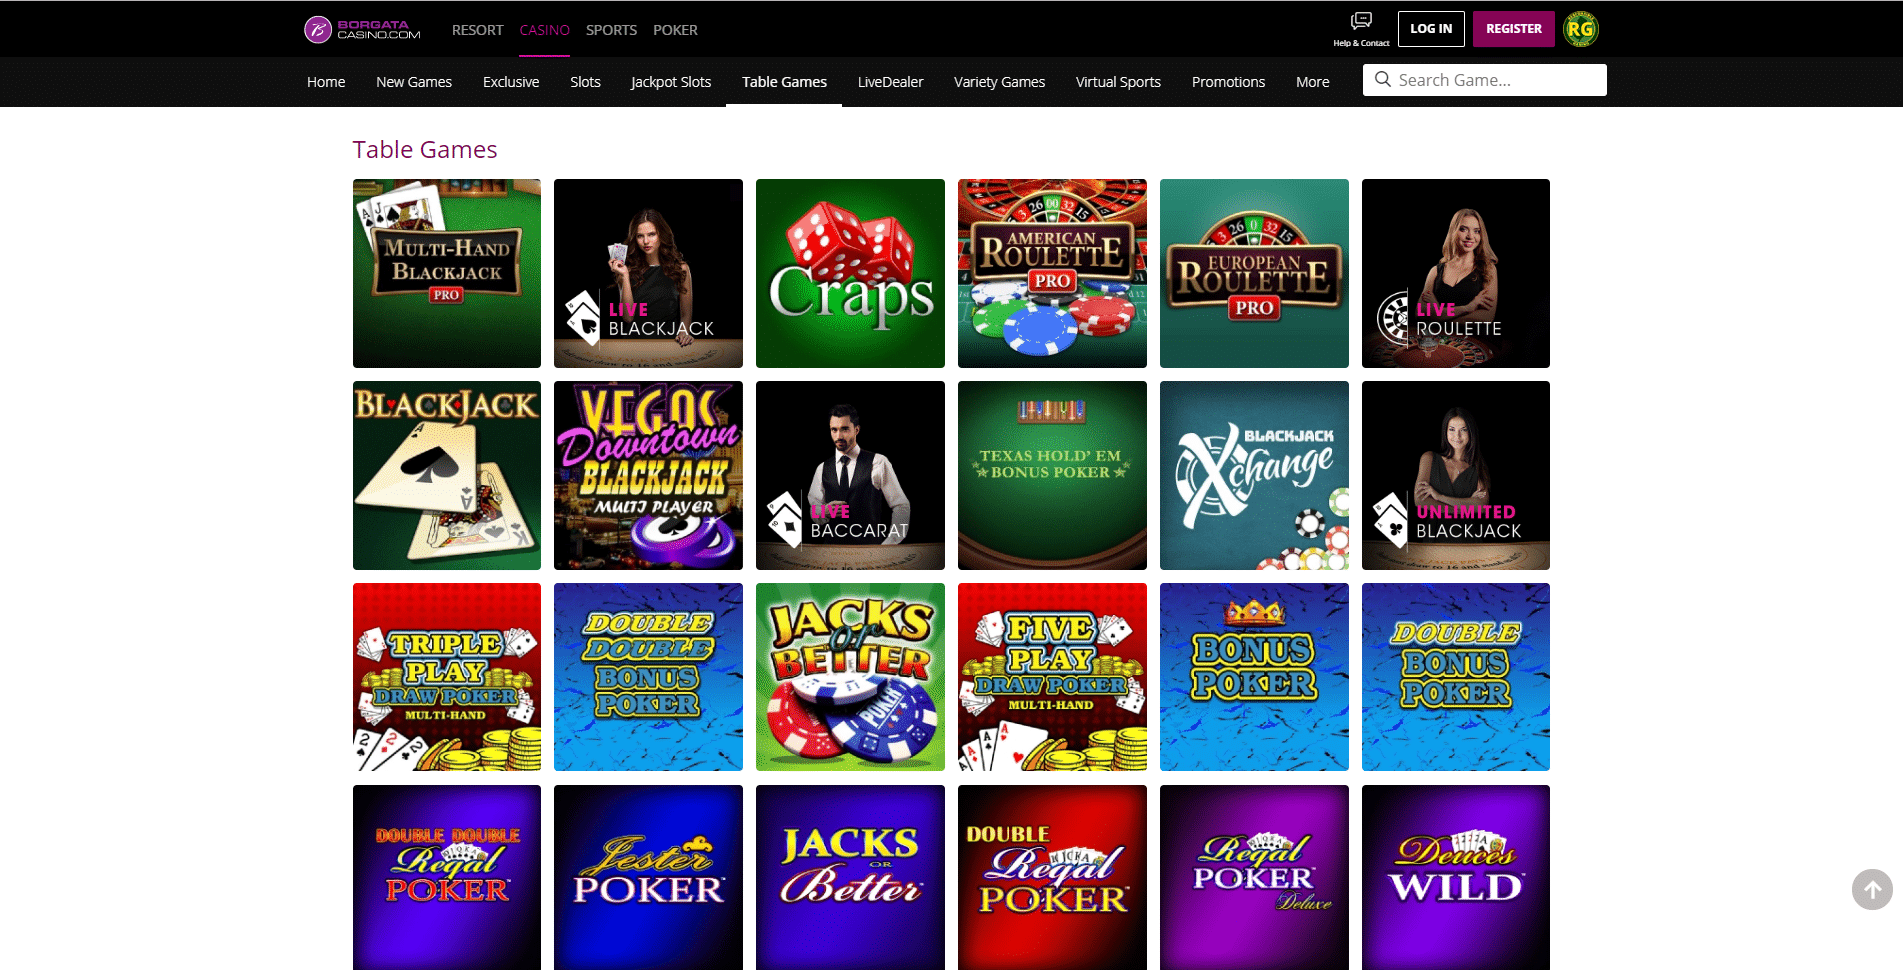 borgata online casino bonus